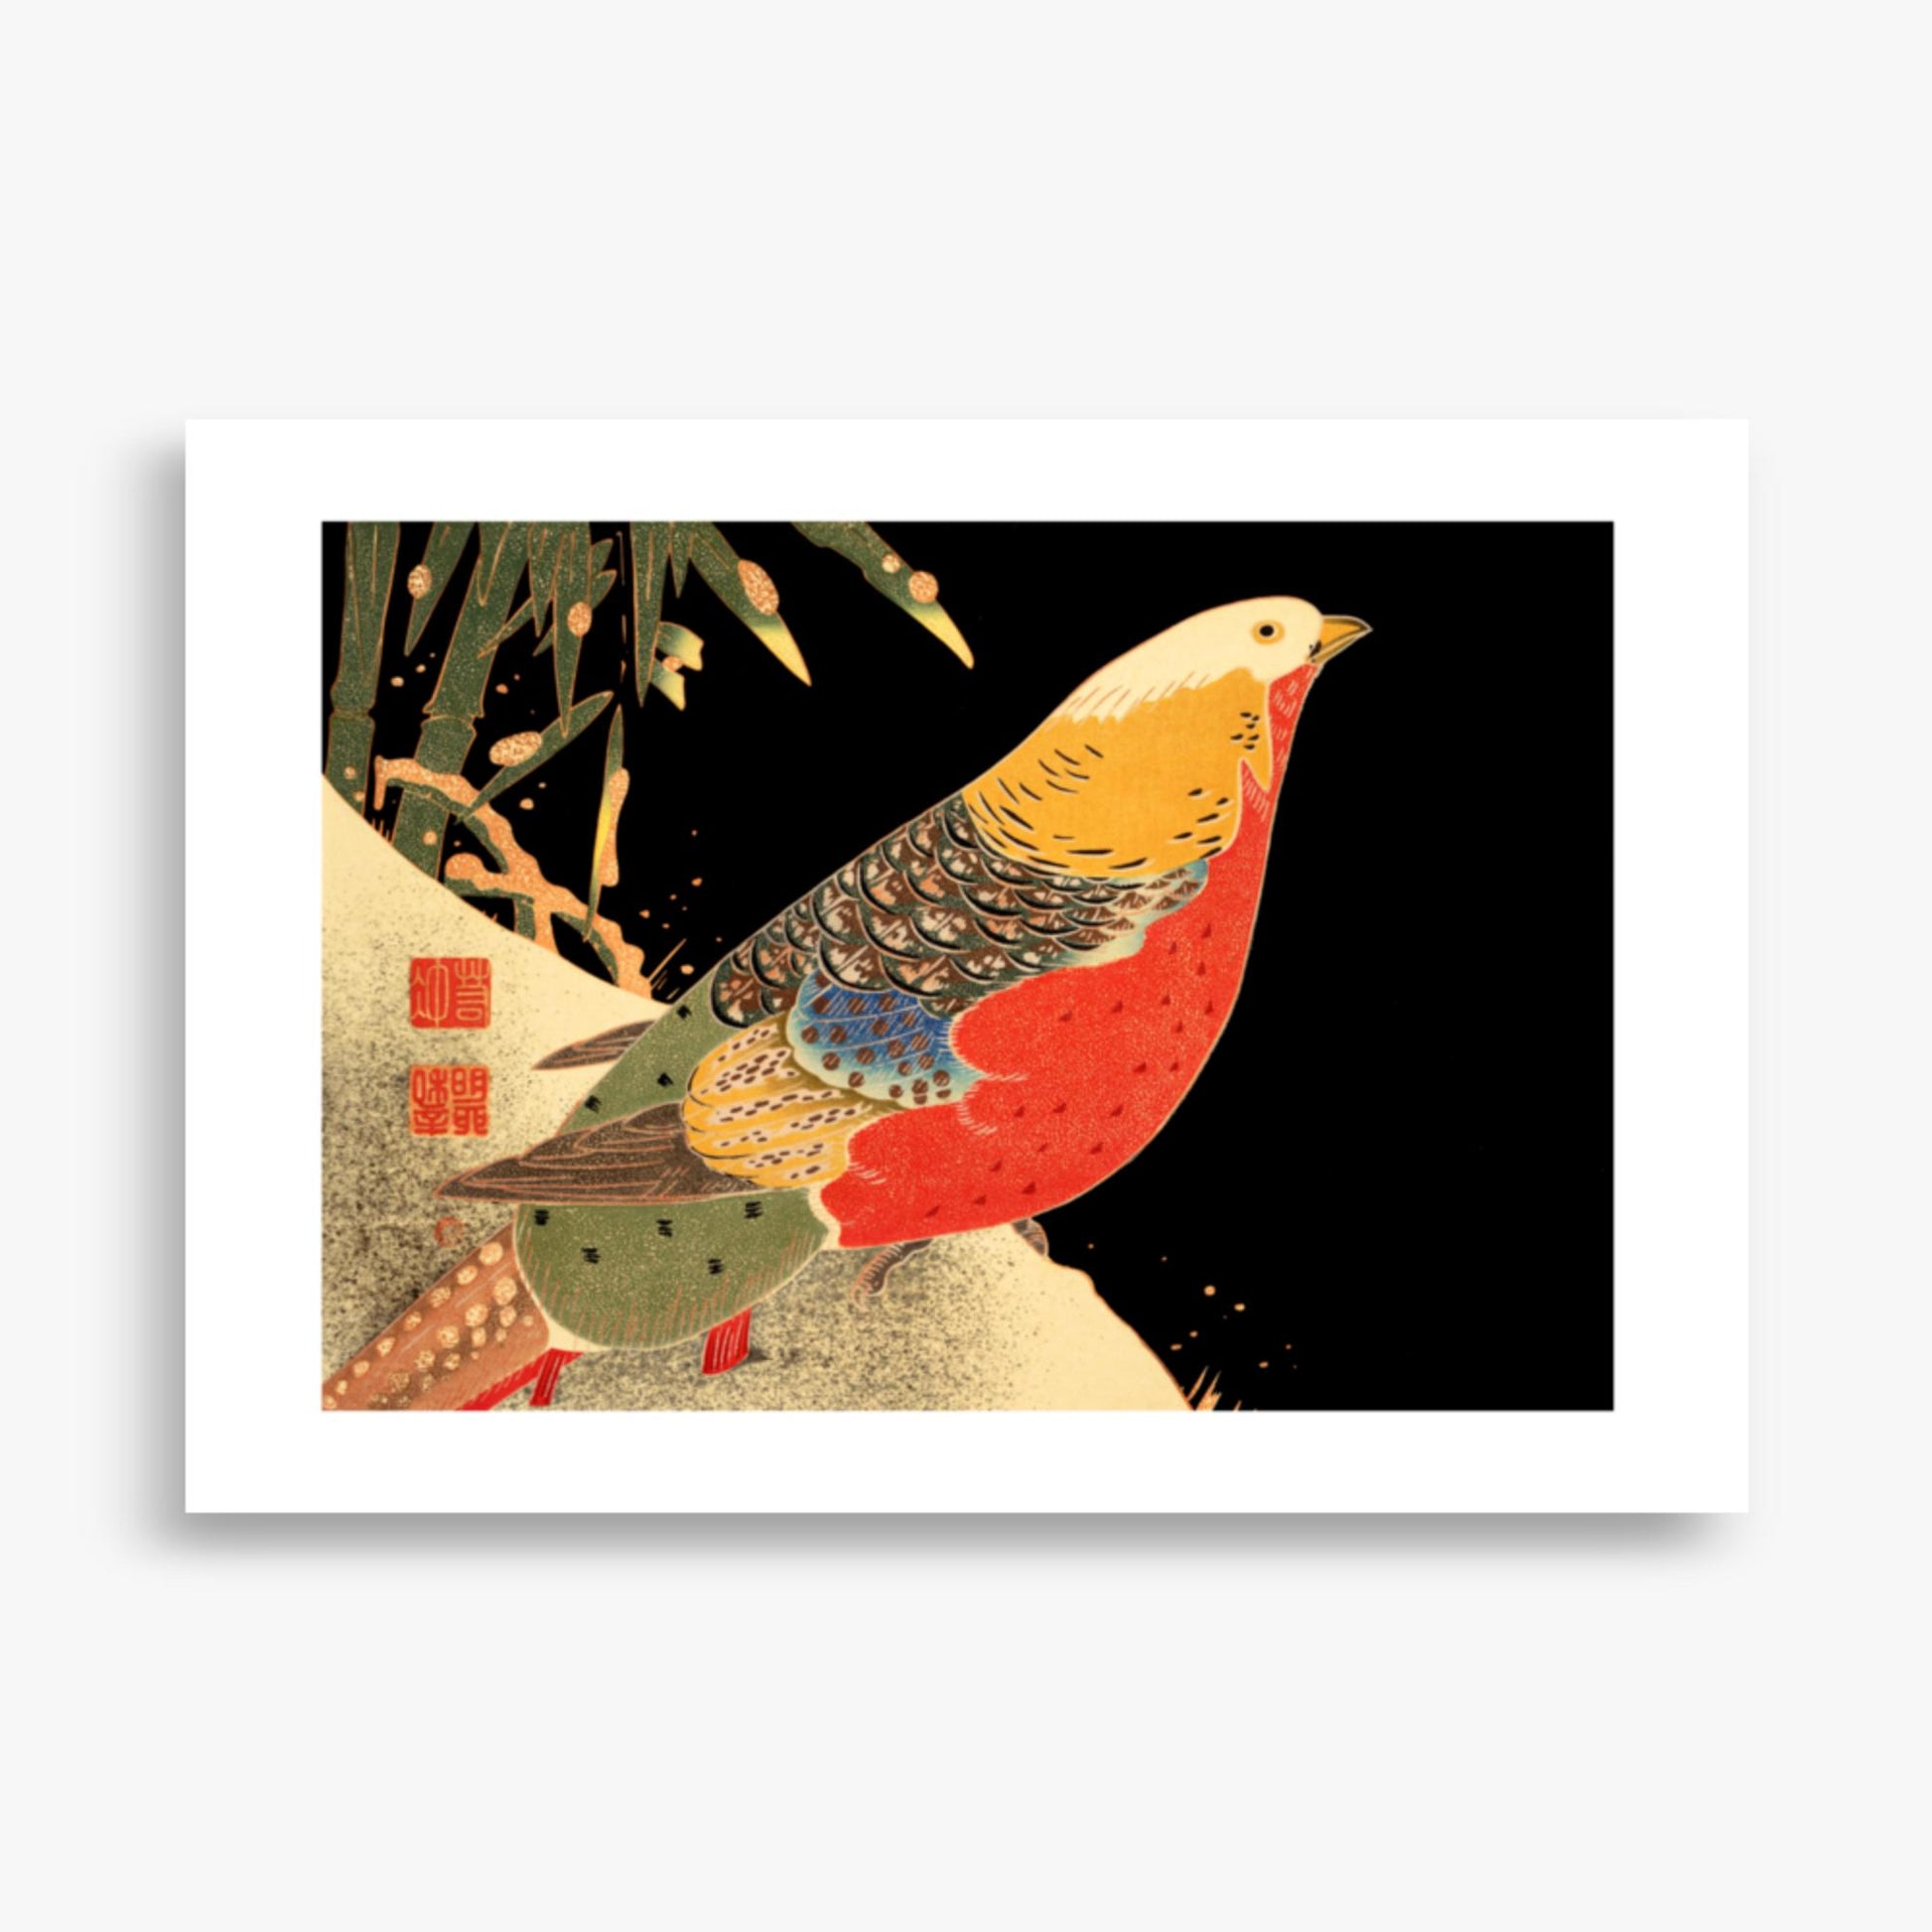 Ito Jakuchu - Golden Pheasant in the Snow 70x100 cm Poster